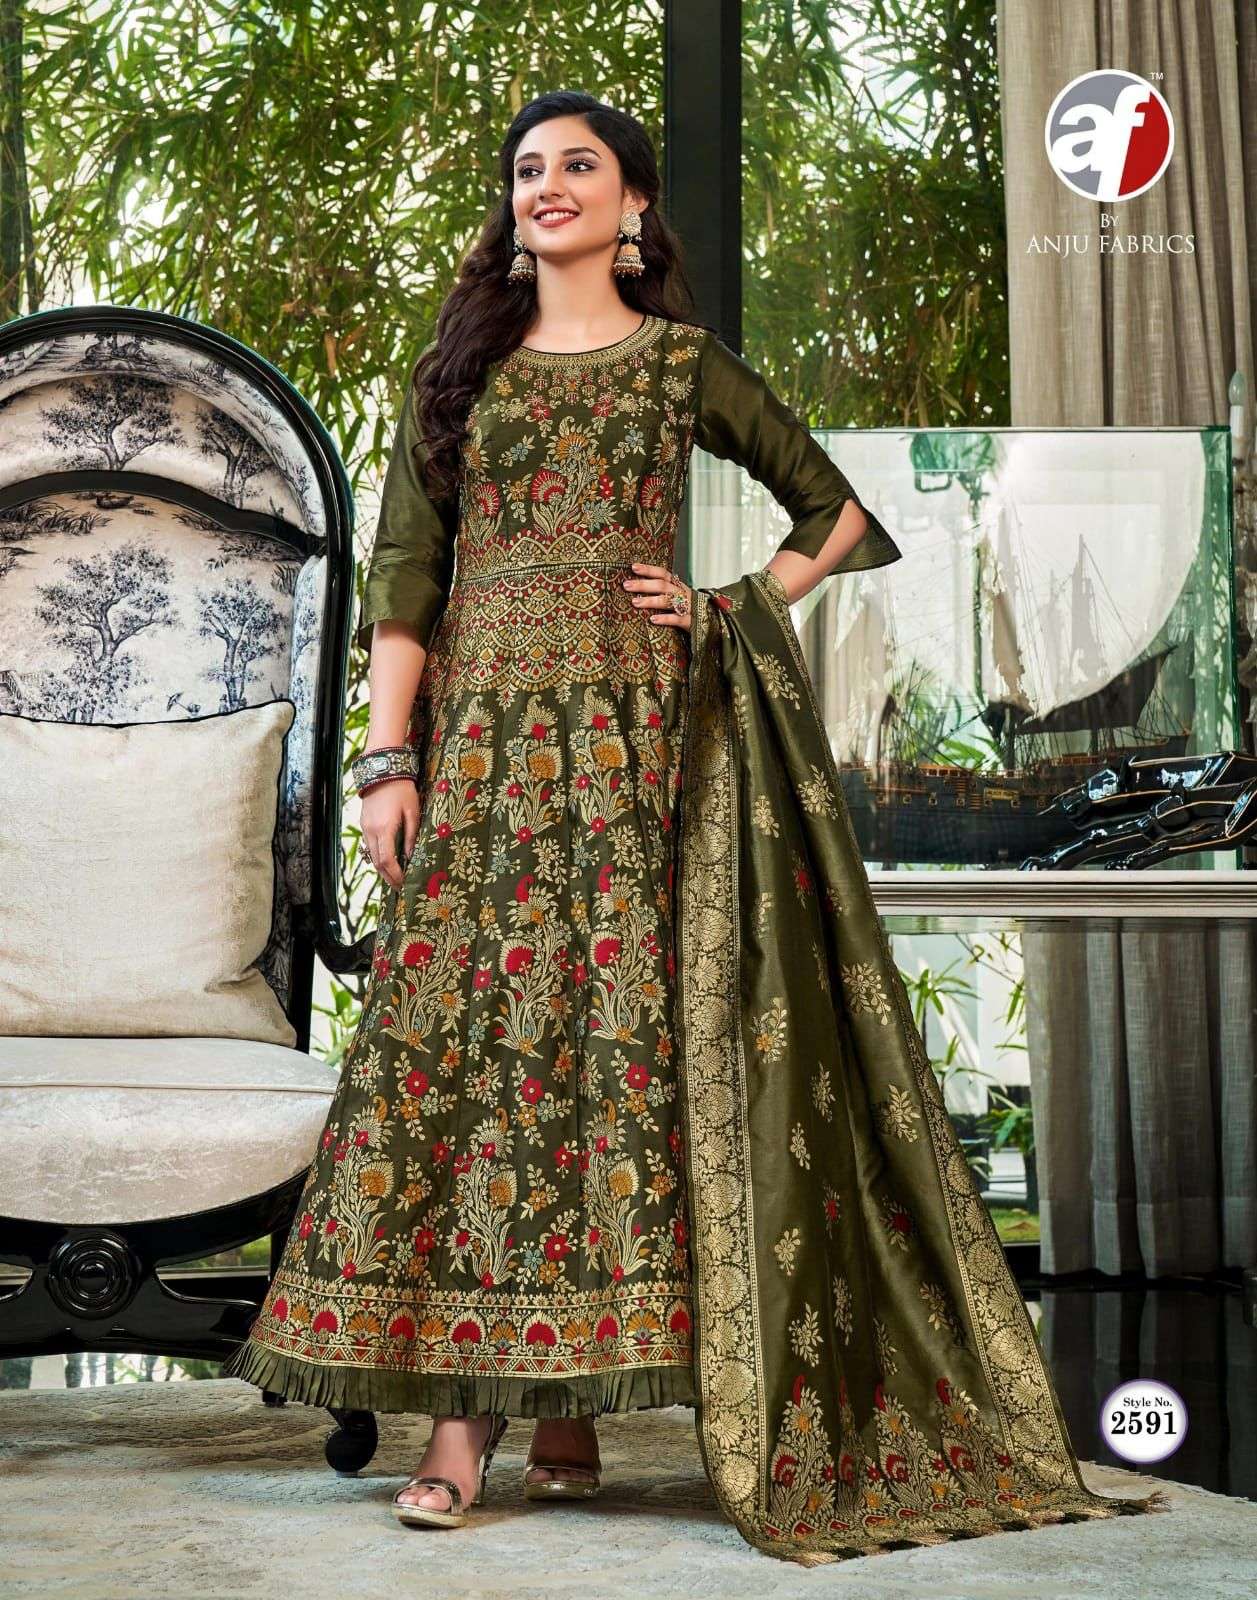 Phoolkari By Anju Fabrics Designer Wholesale Online Kurtis With Dupatta Set